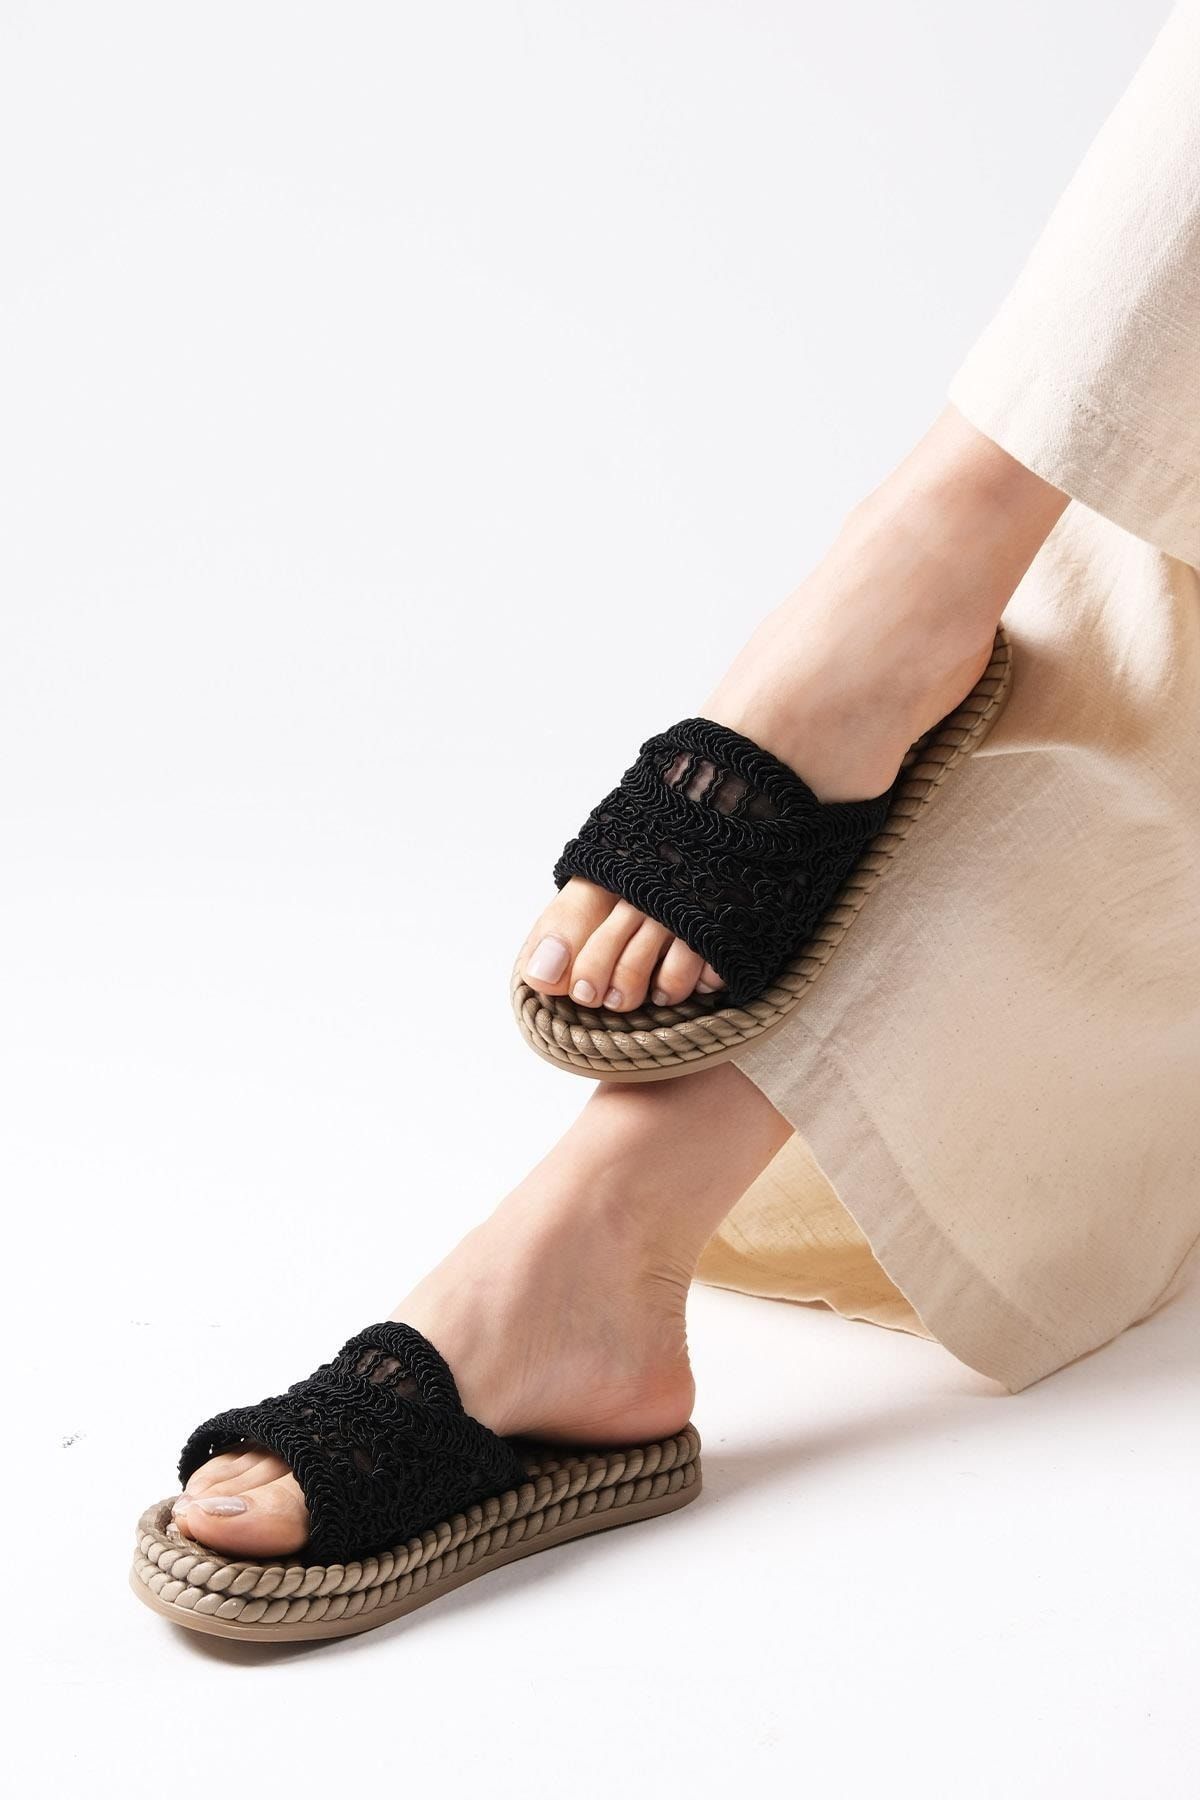 Mio Gusto طناب رنگ سیاه پالوما کفش های دمپایی بافندگی زن مبتنی بر